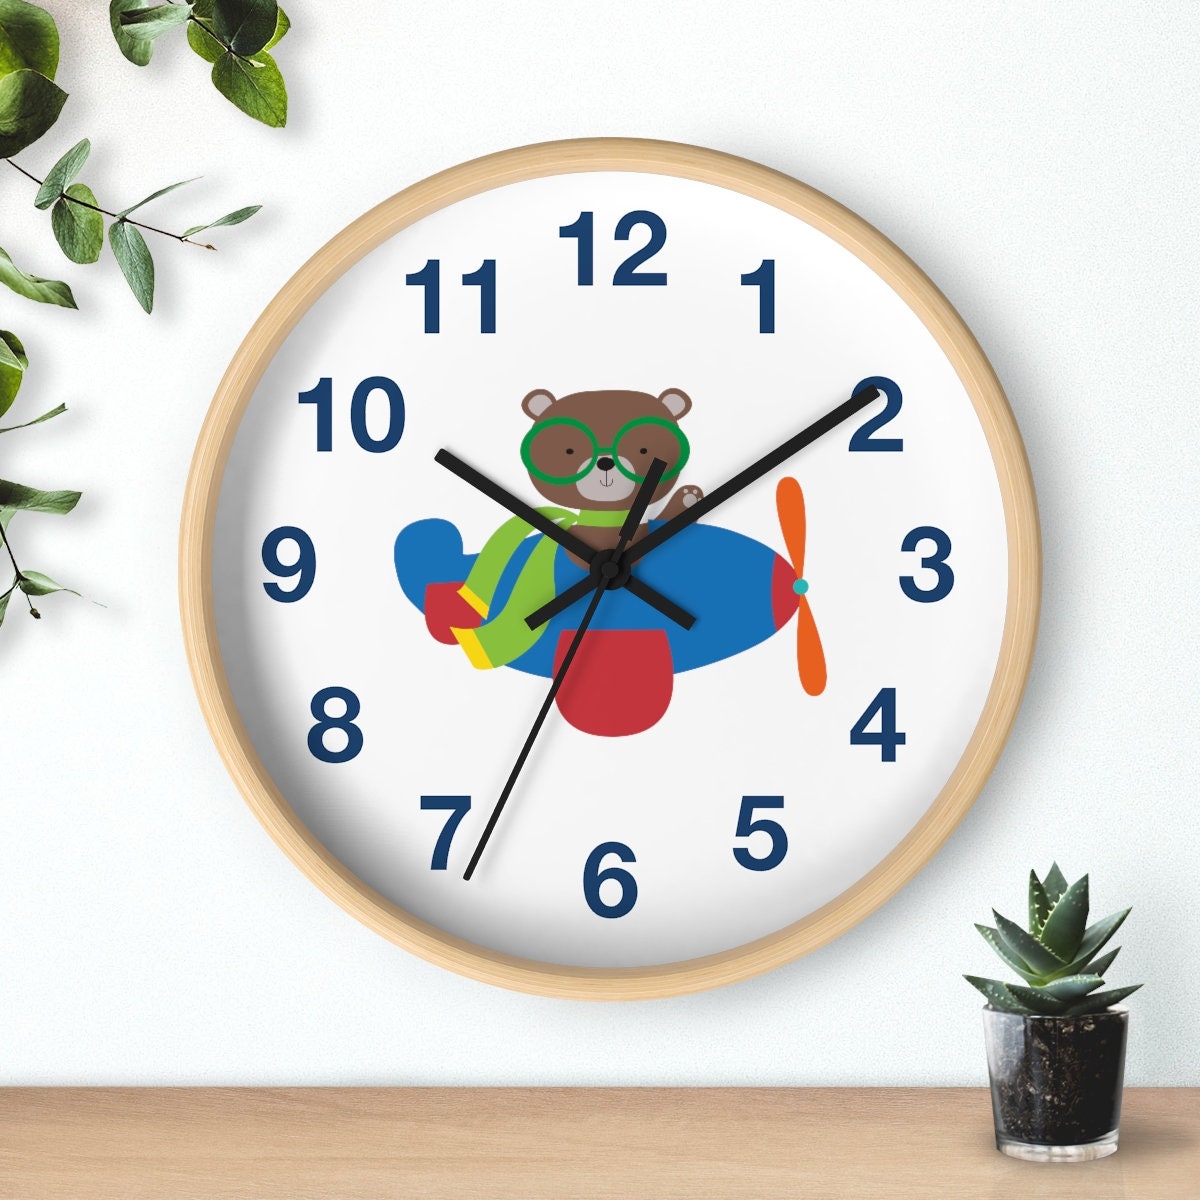 Details about   Kids Room Decor Clocks Cartoon Fun Nursery Plane AIRPLANE FLYING KIDS CLOCK 3001 